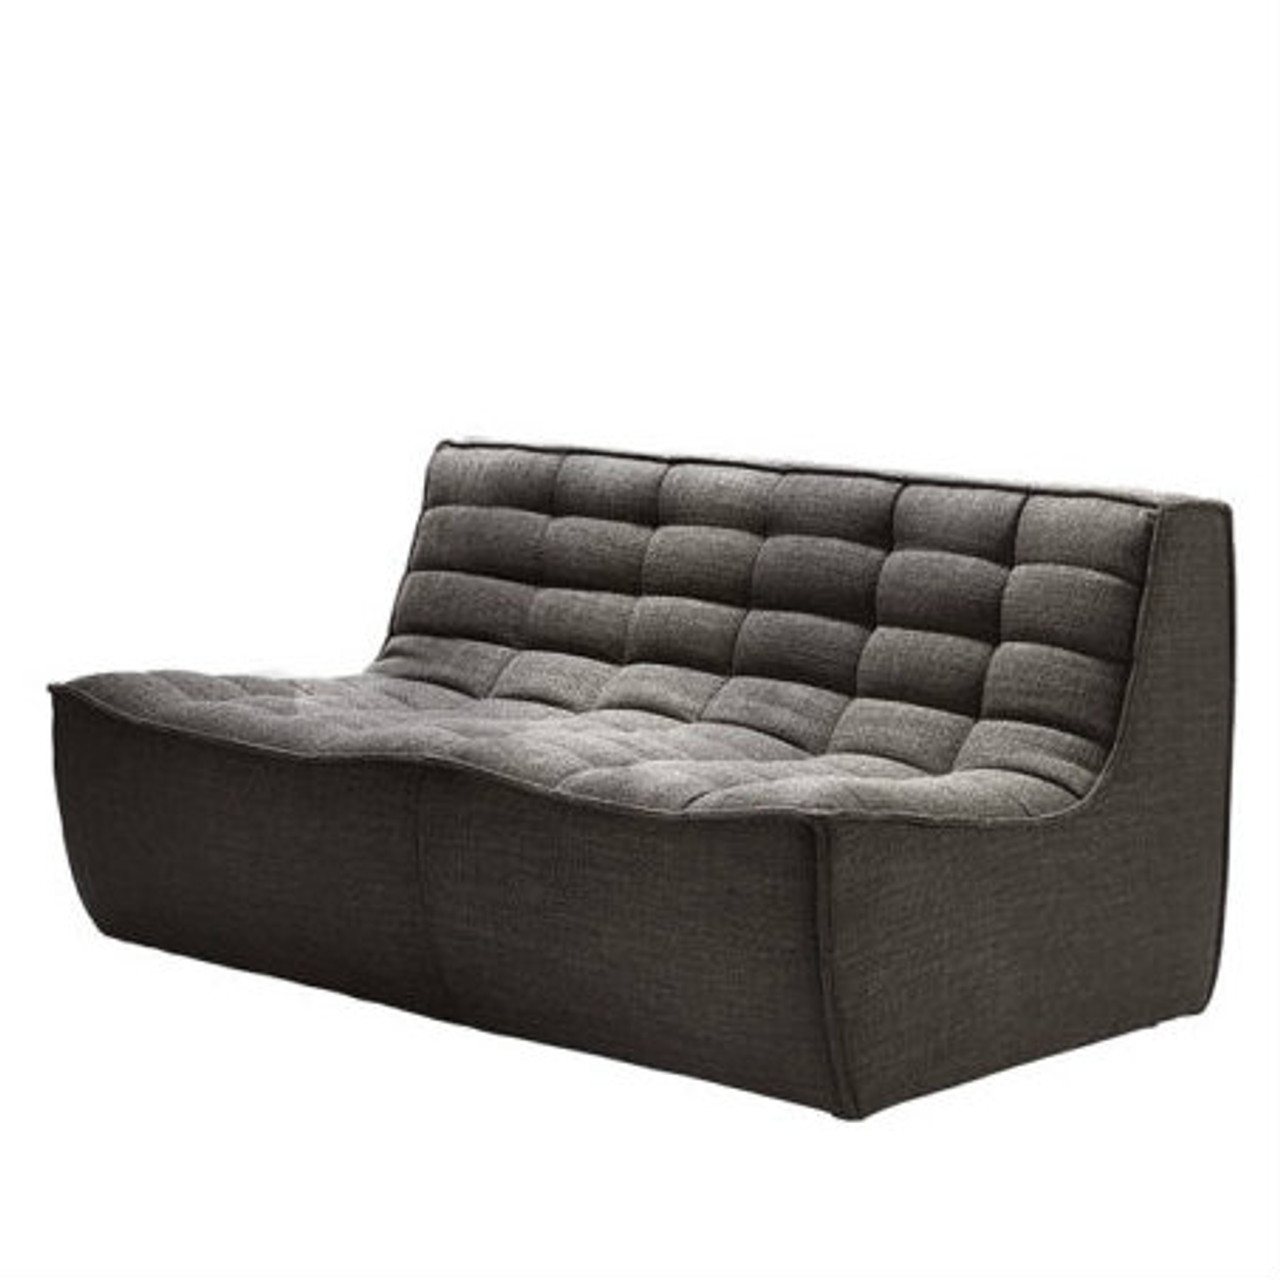 Roset Modern Modular Sectional Sofa - 2 Seater